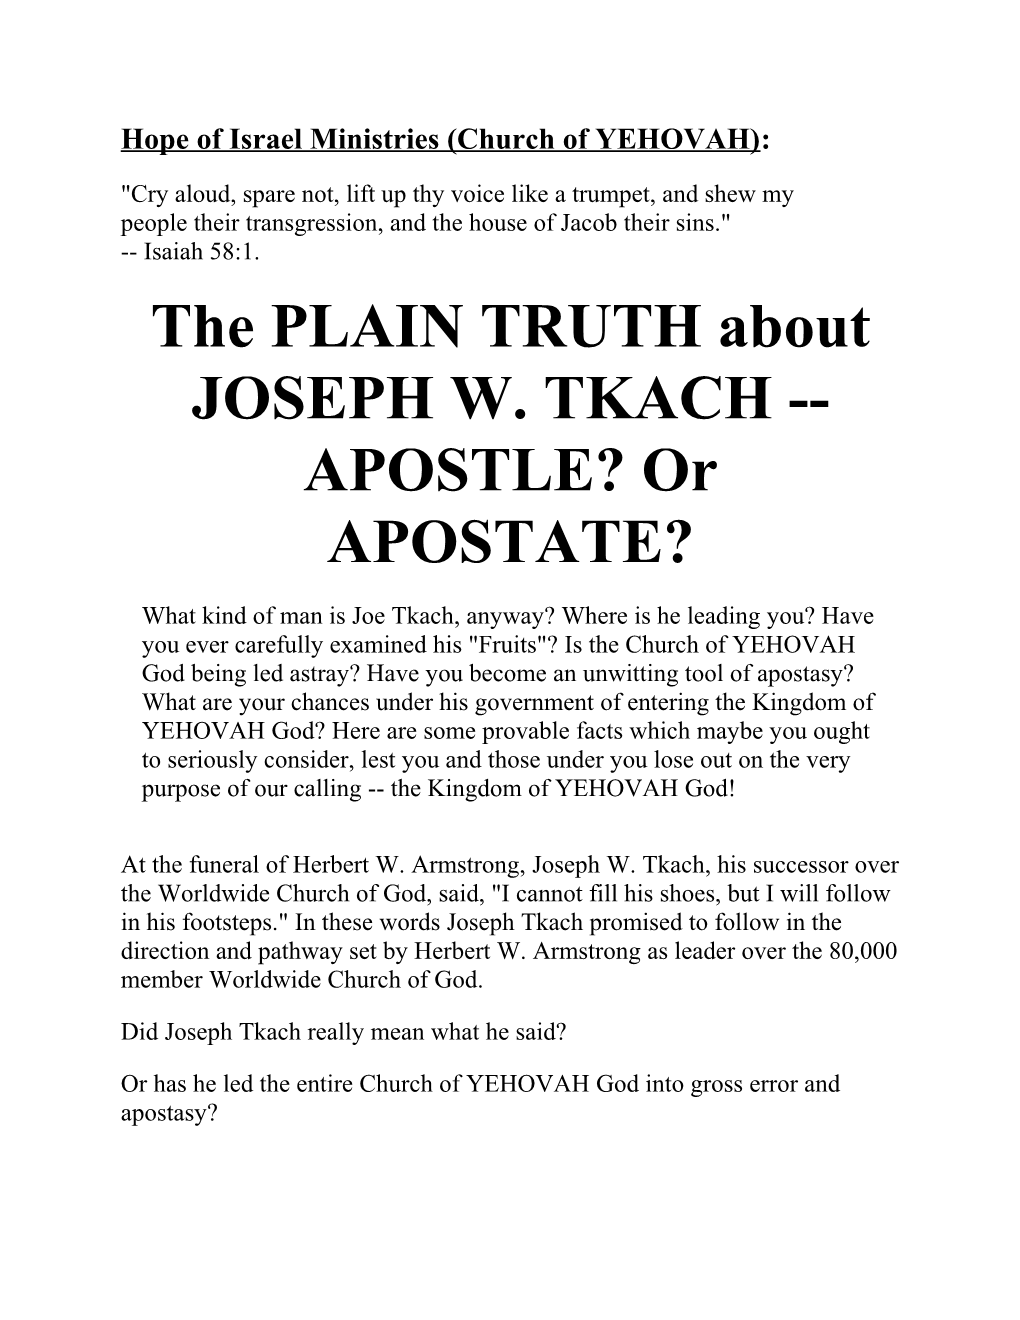 The Plain Truth About Joseph W. Tkach Apostle? Or Apostate?